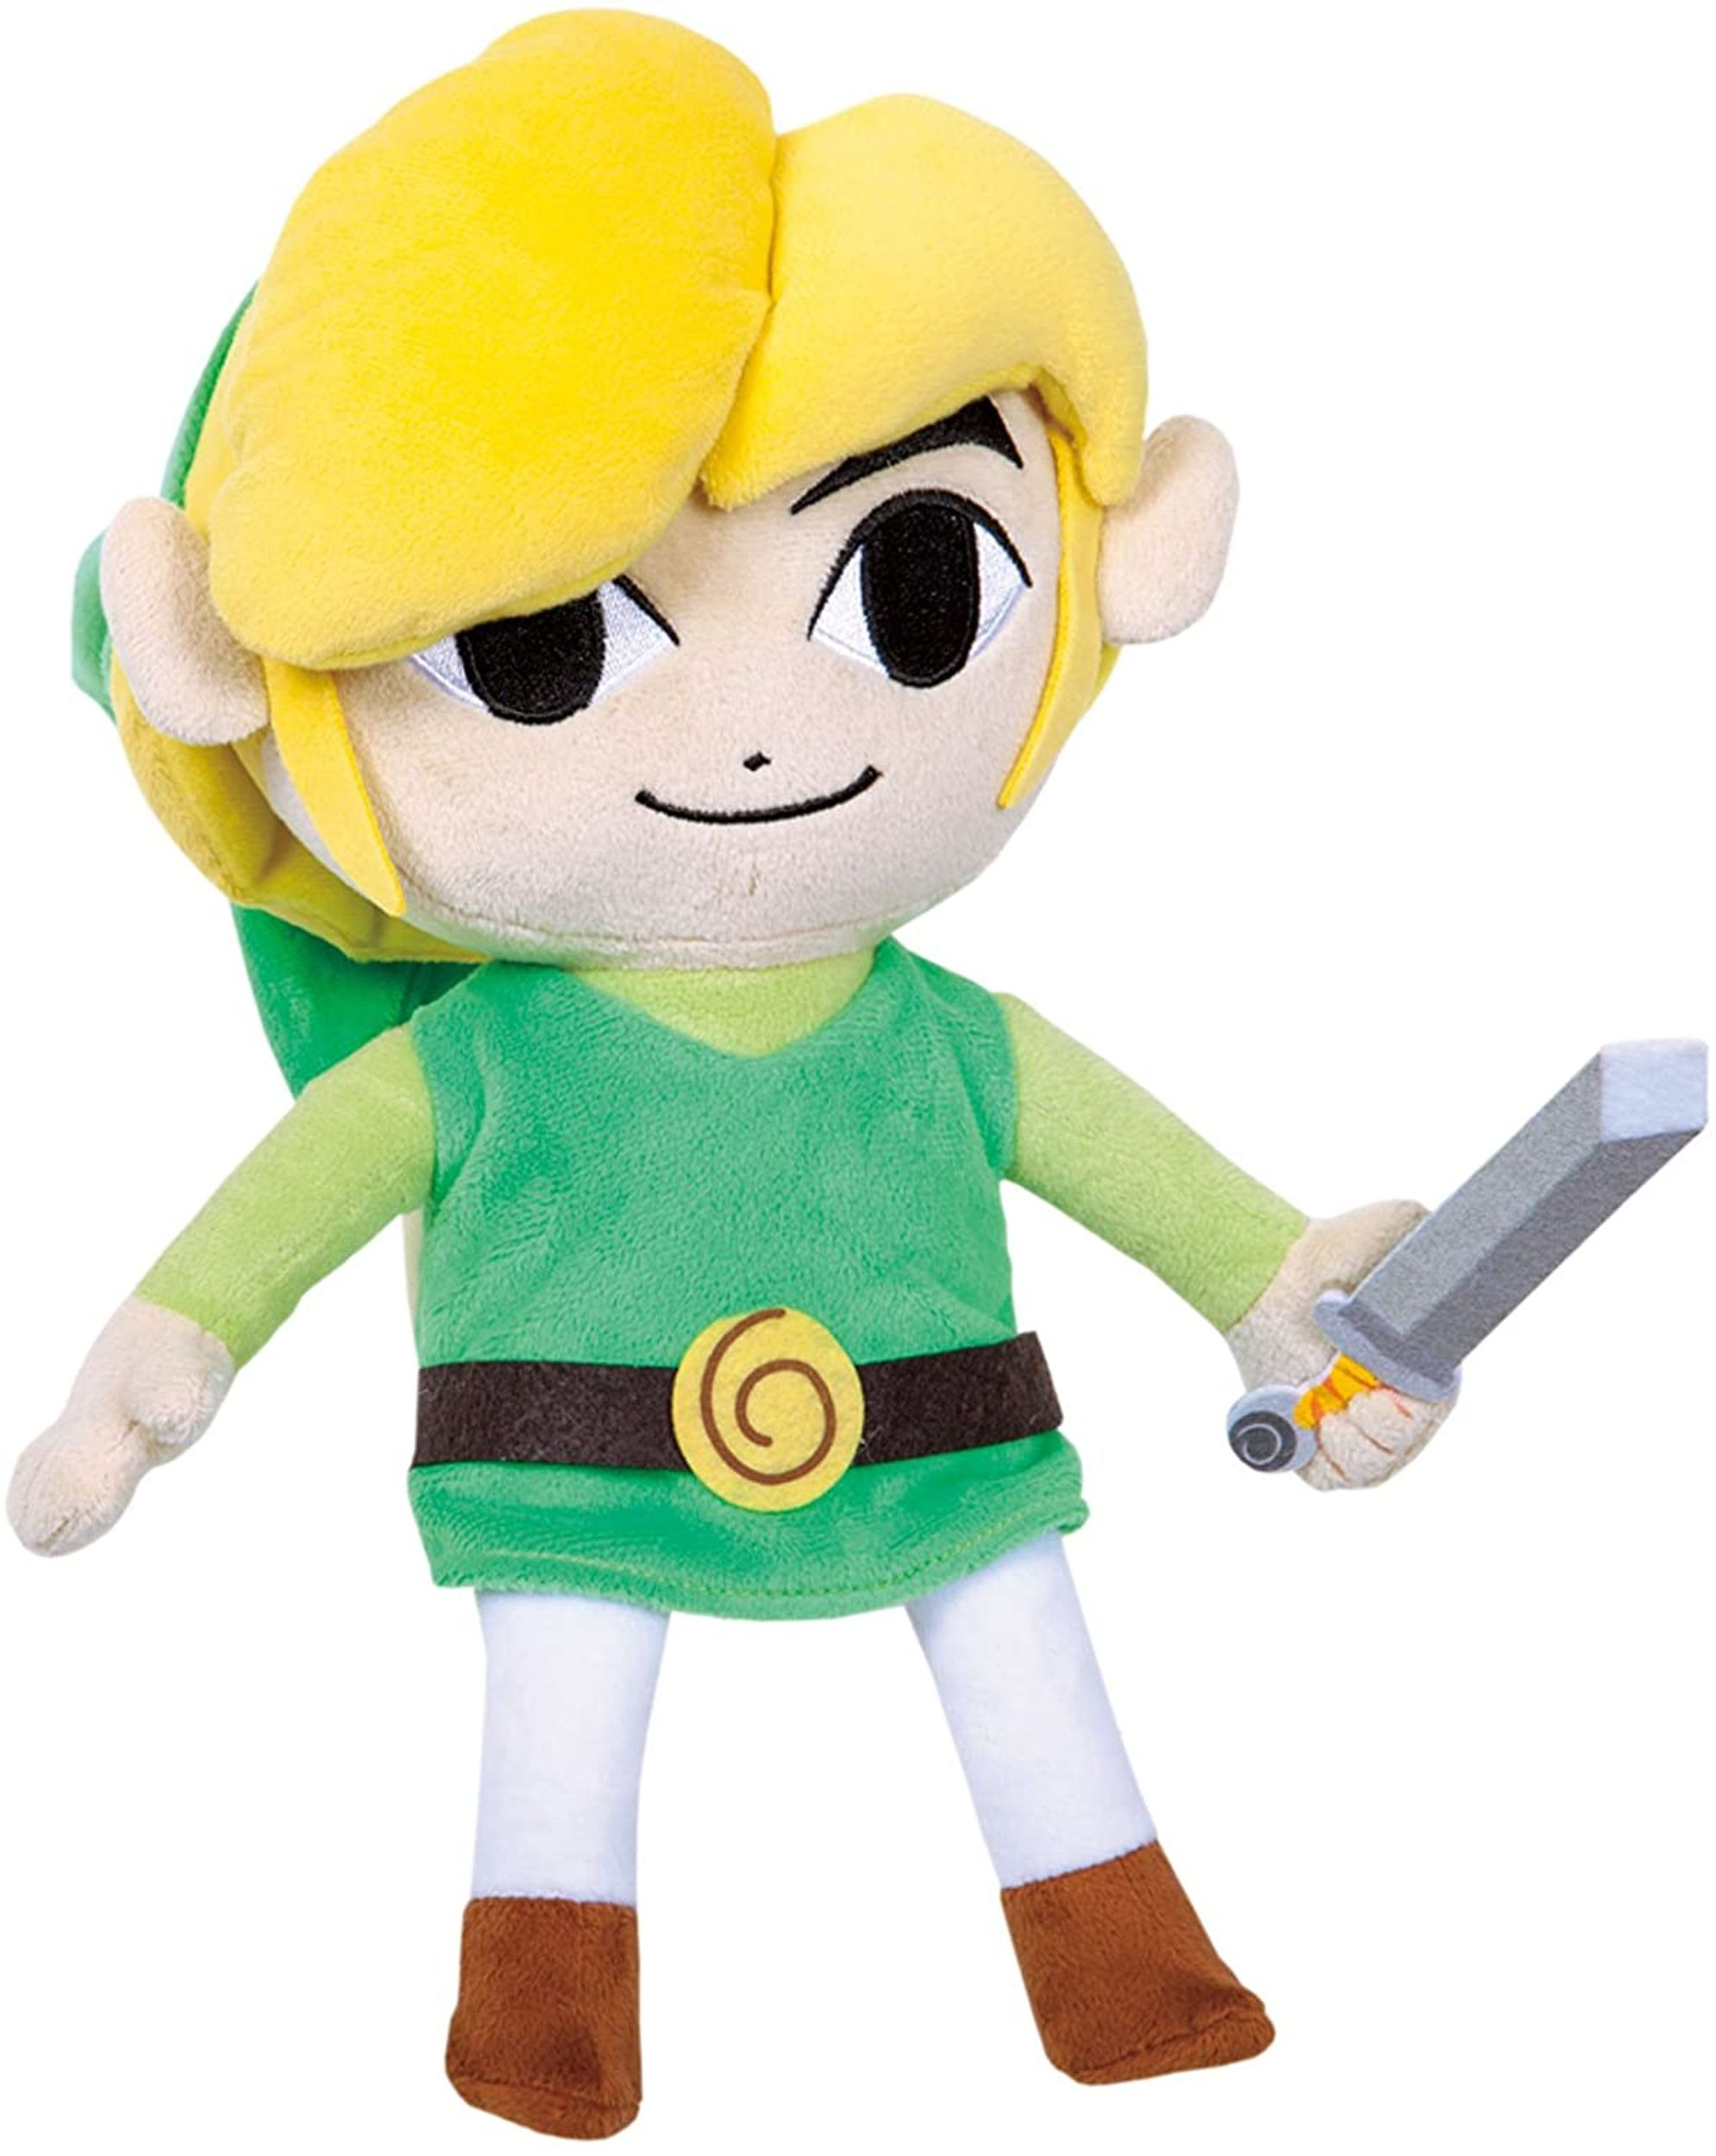 NINTENDO Plüschfigur Zelda Link